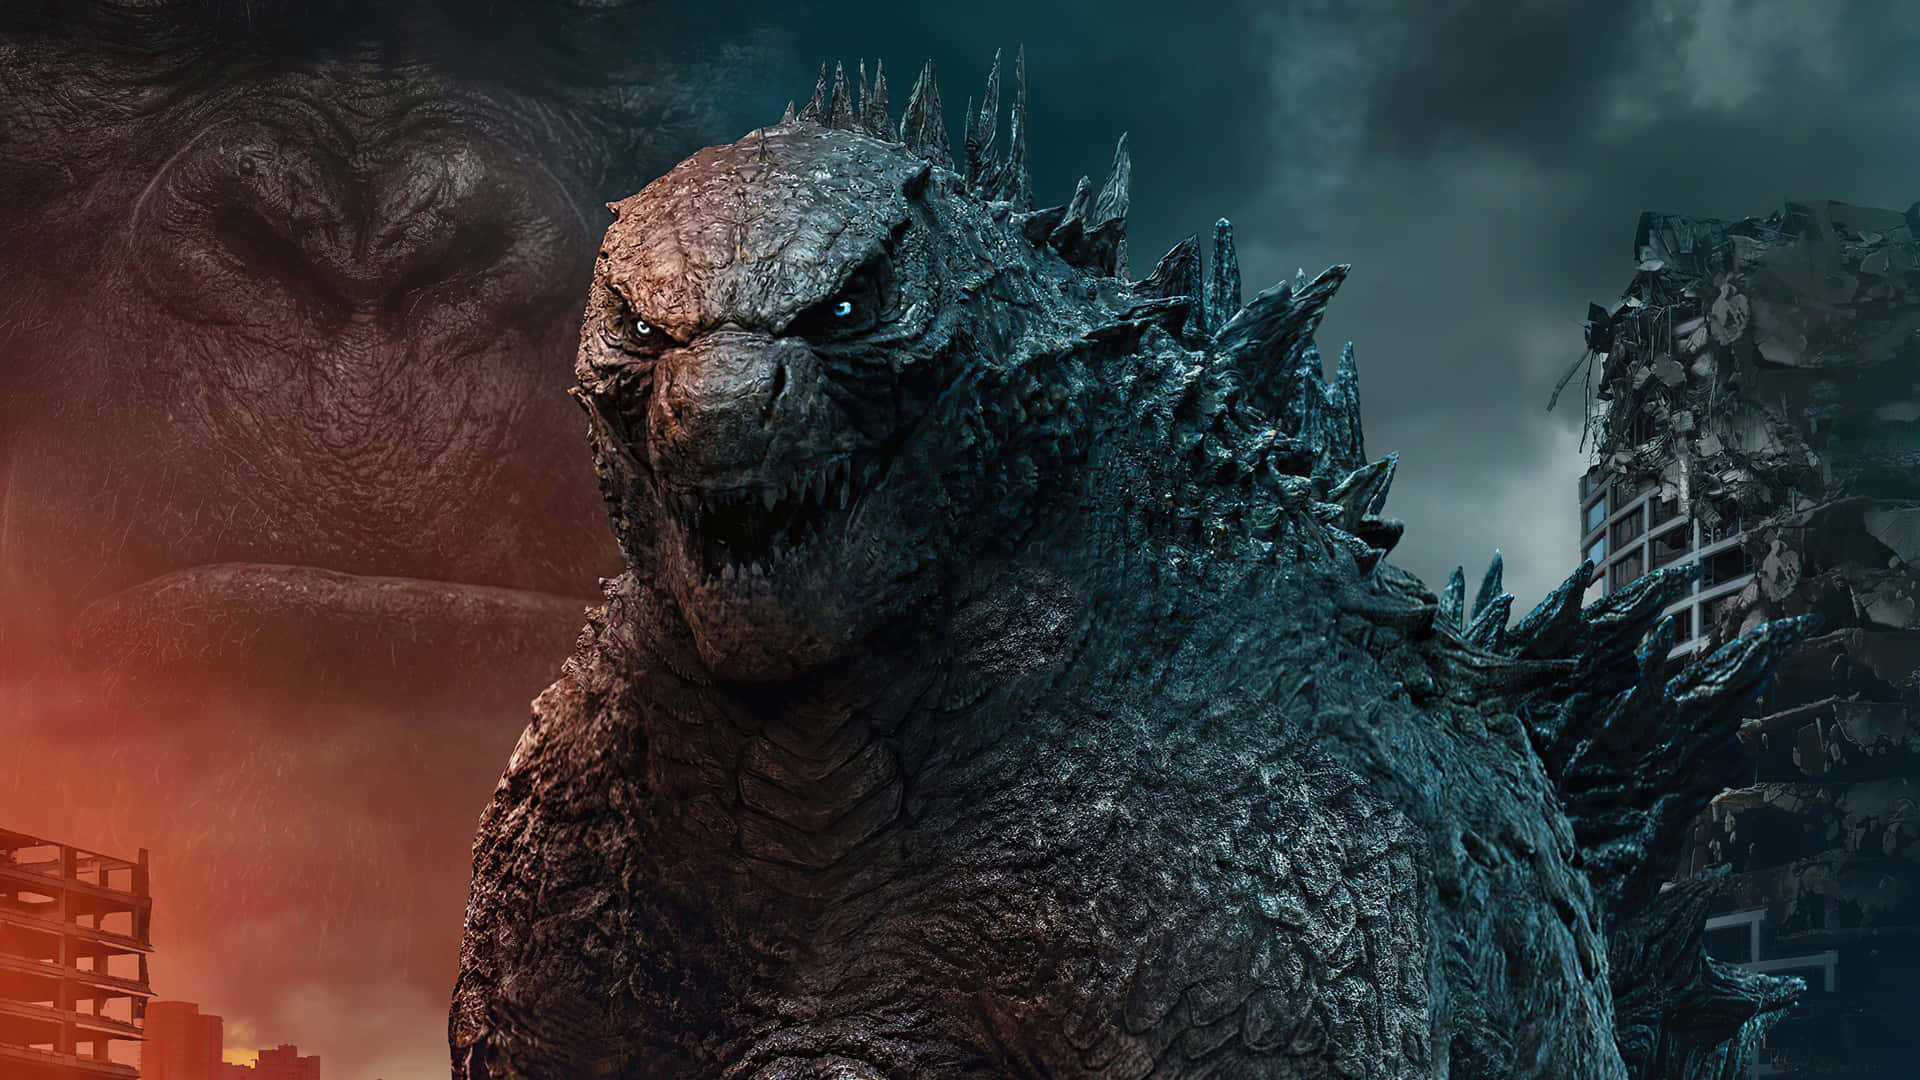 Legendary Clash: Godzilla fights Kong in an Epic Battle